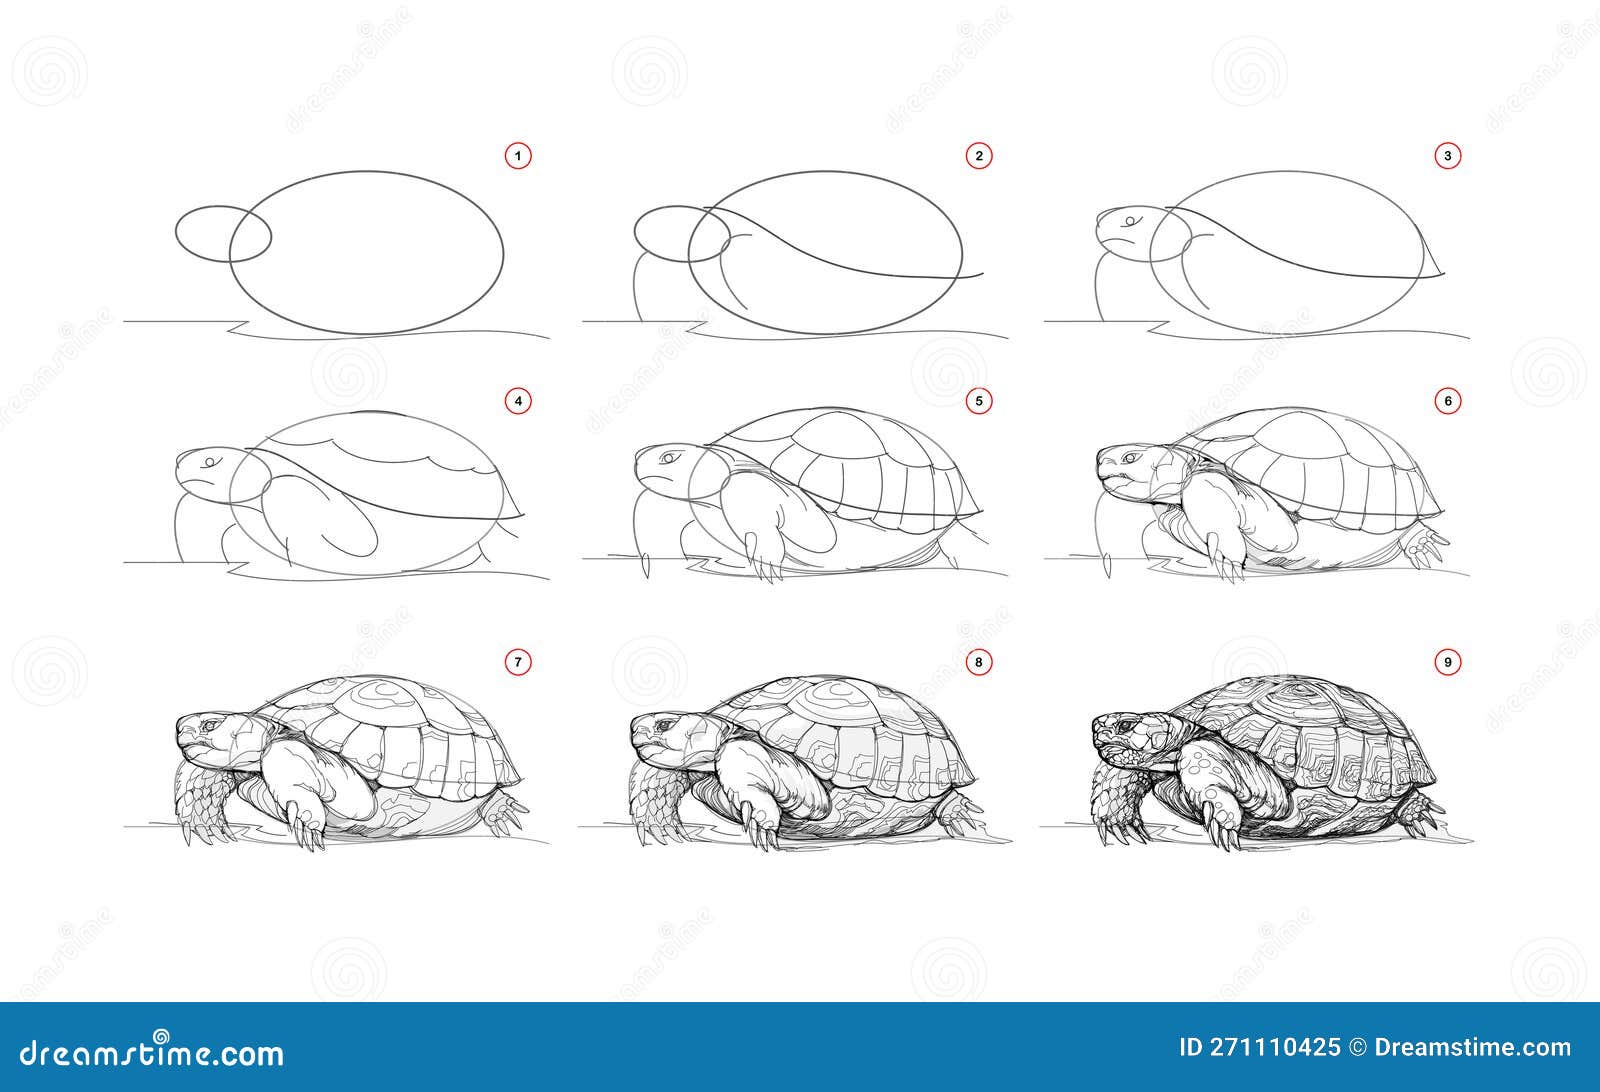 pencil sketch shading sea turtle | - DragoArt